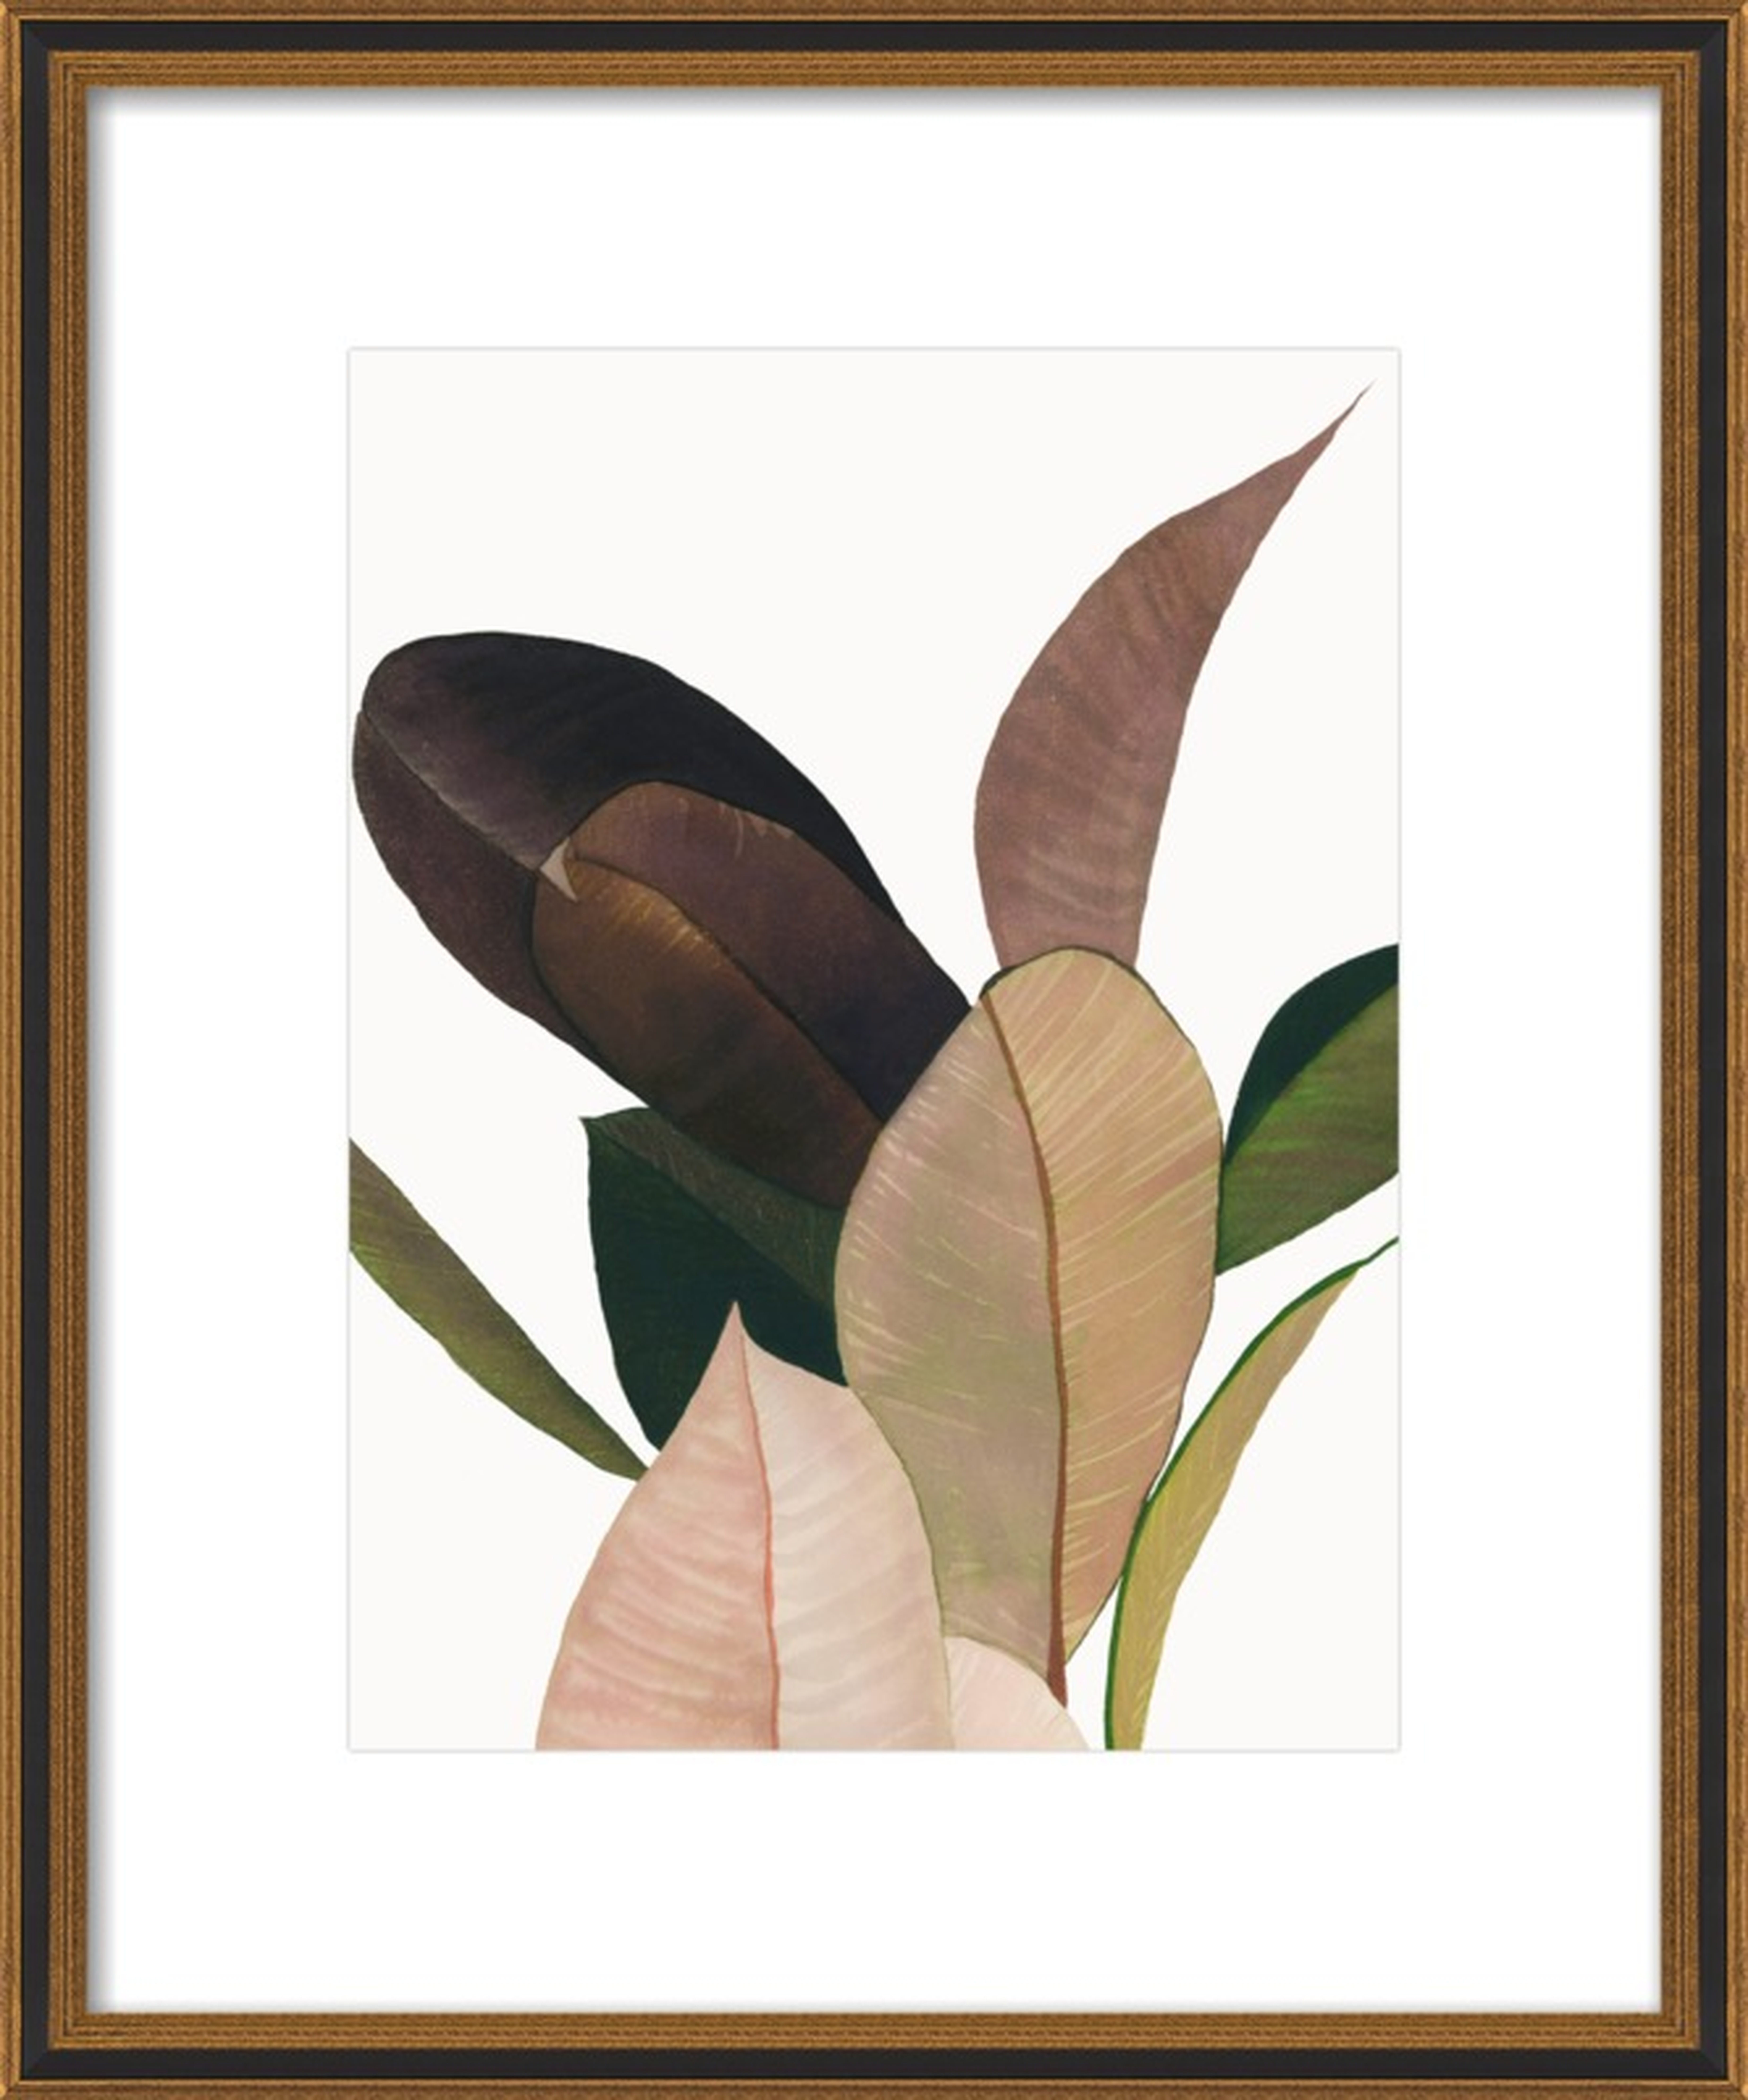 Friends  BY EMILY GRADY DODGE - 8x10" Framed Art Print, Black Gold Reverse Wood, frame - Artfully Walls